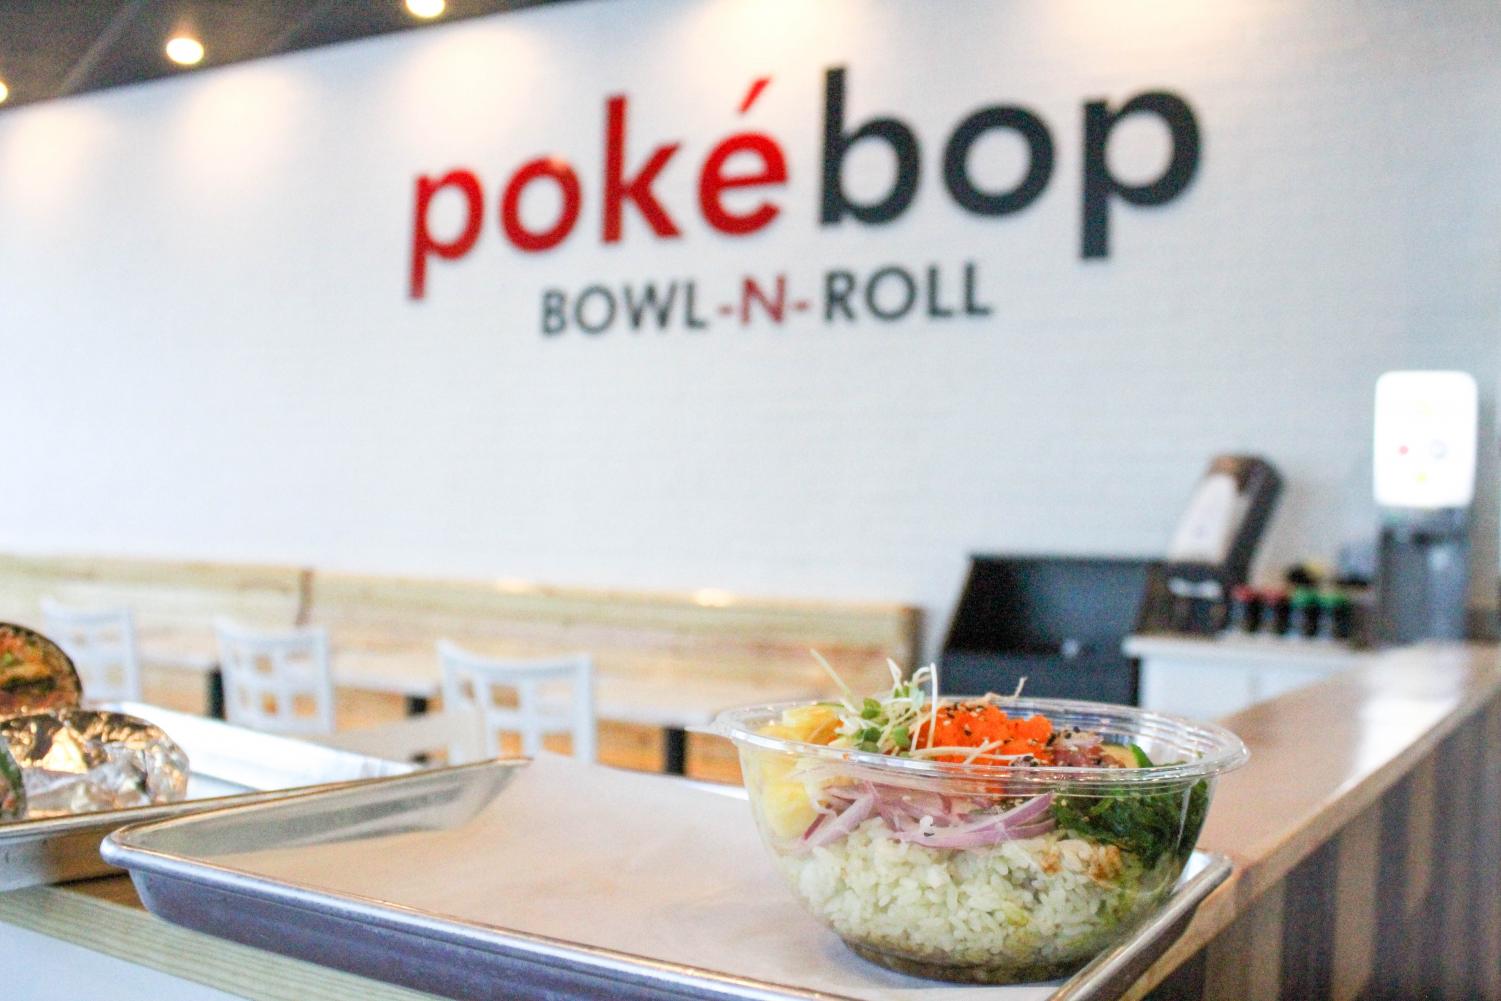 Poke+Bop+serves+up+an+authentic+Hawaiian+menu